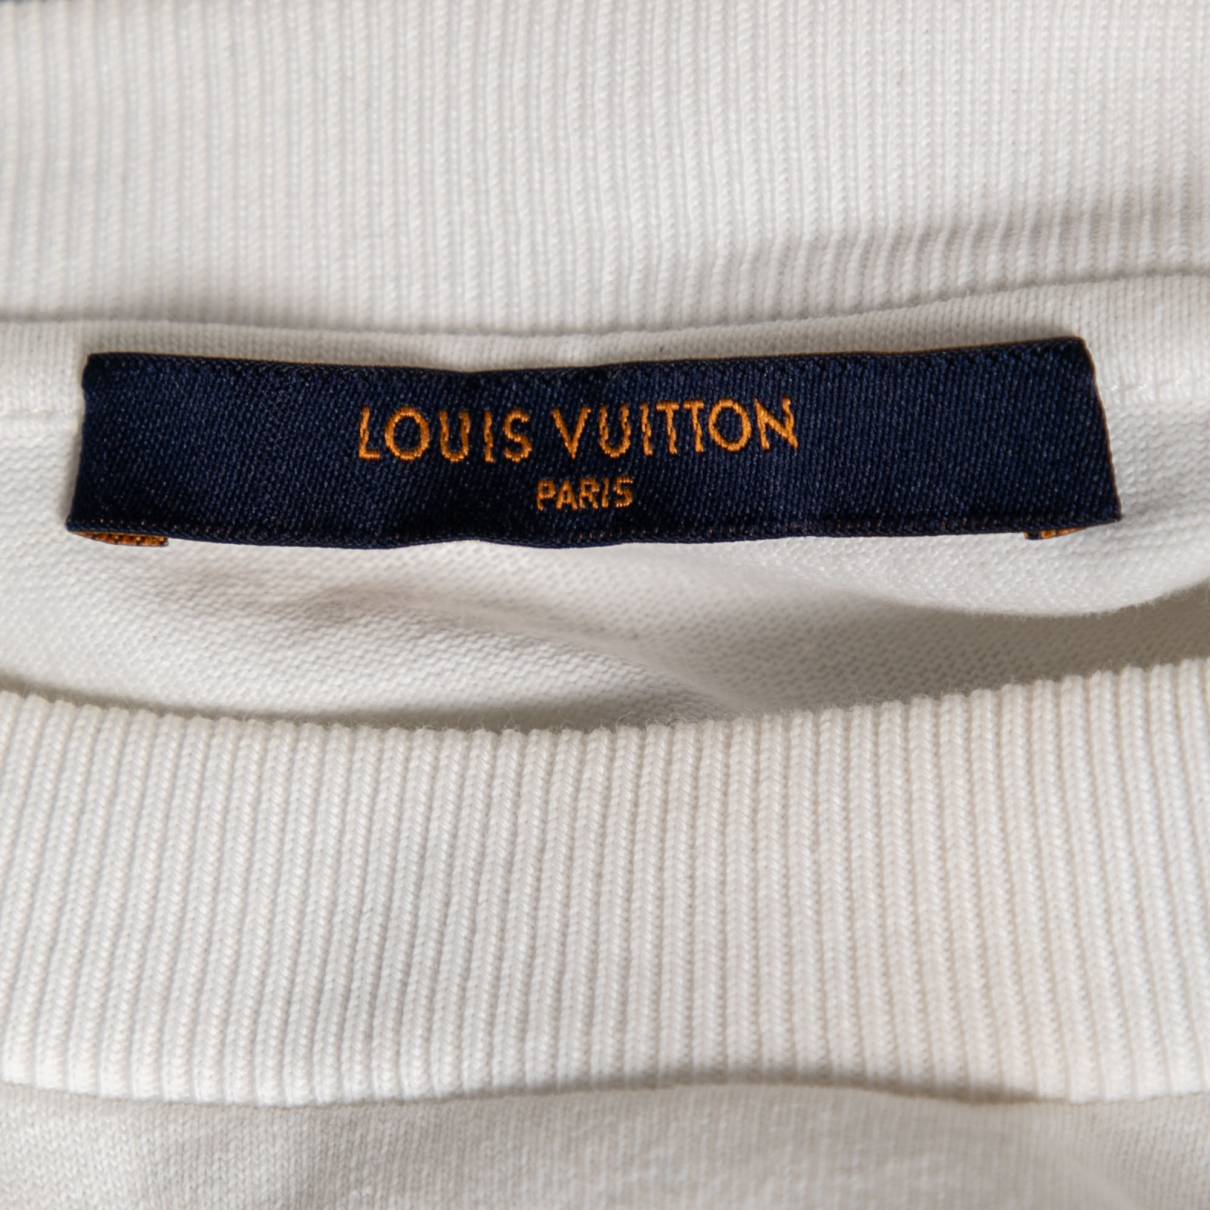 T-shirt Louis Vuitton White size M International in Cotton - 28850590